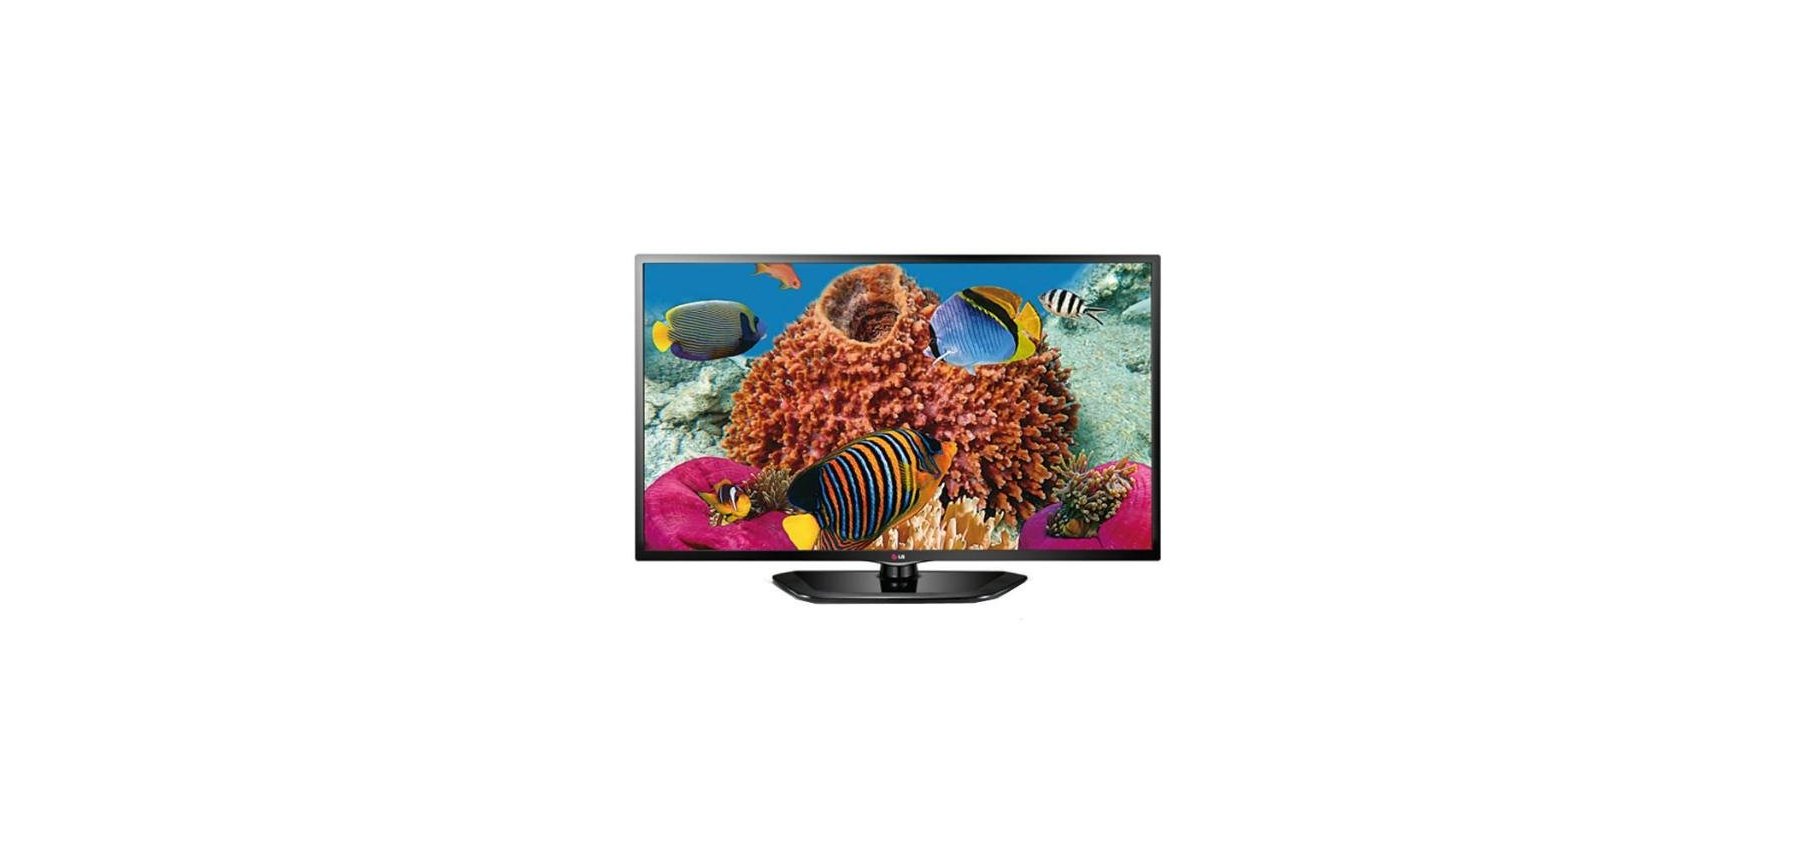 Telewizor LG 39LN5400 39 Cali Dvbt-2 Hevc.265 Nowy Sygnał nadawania